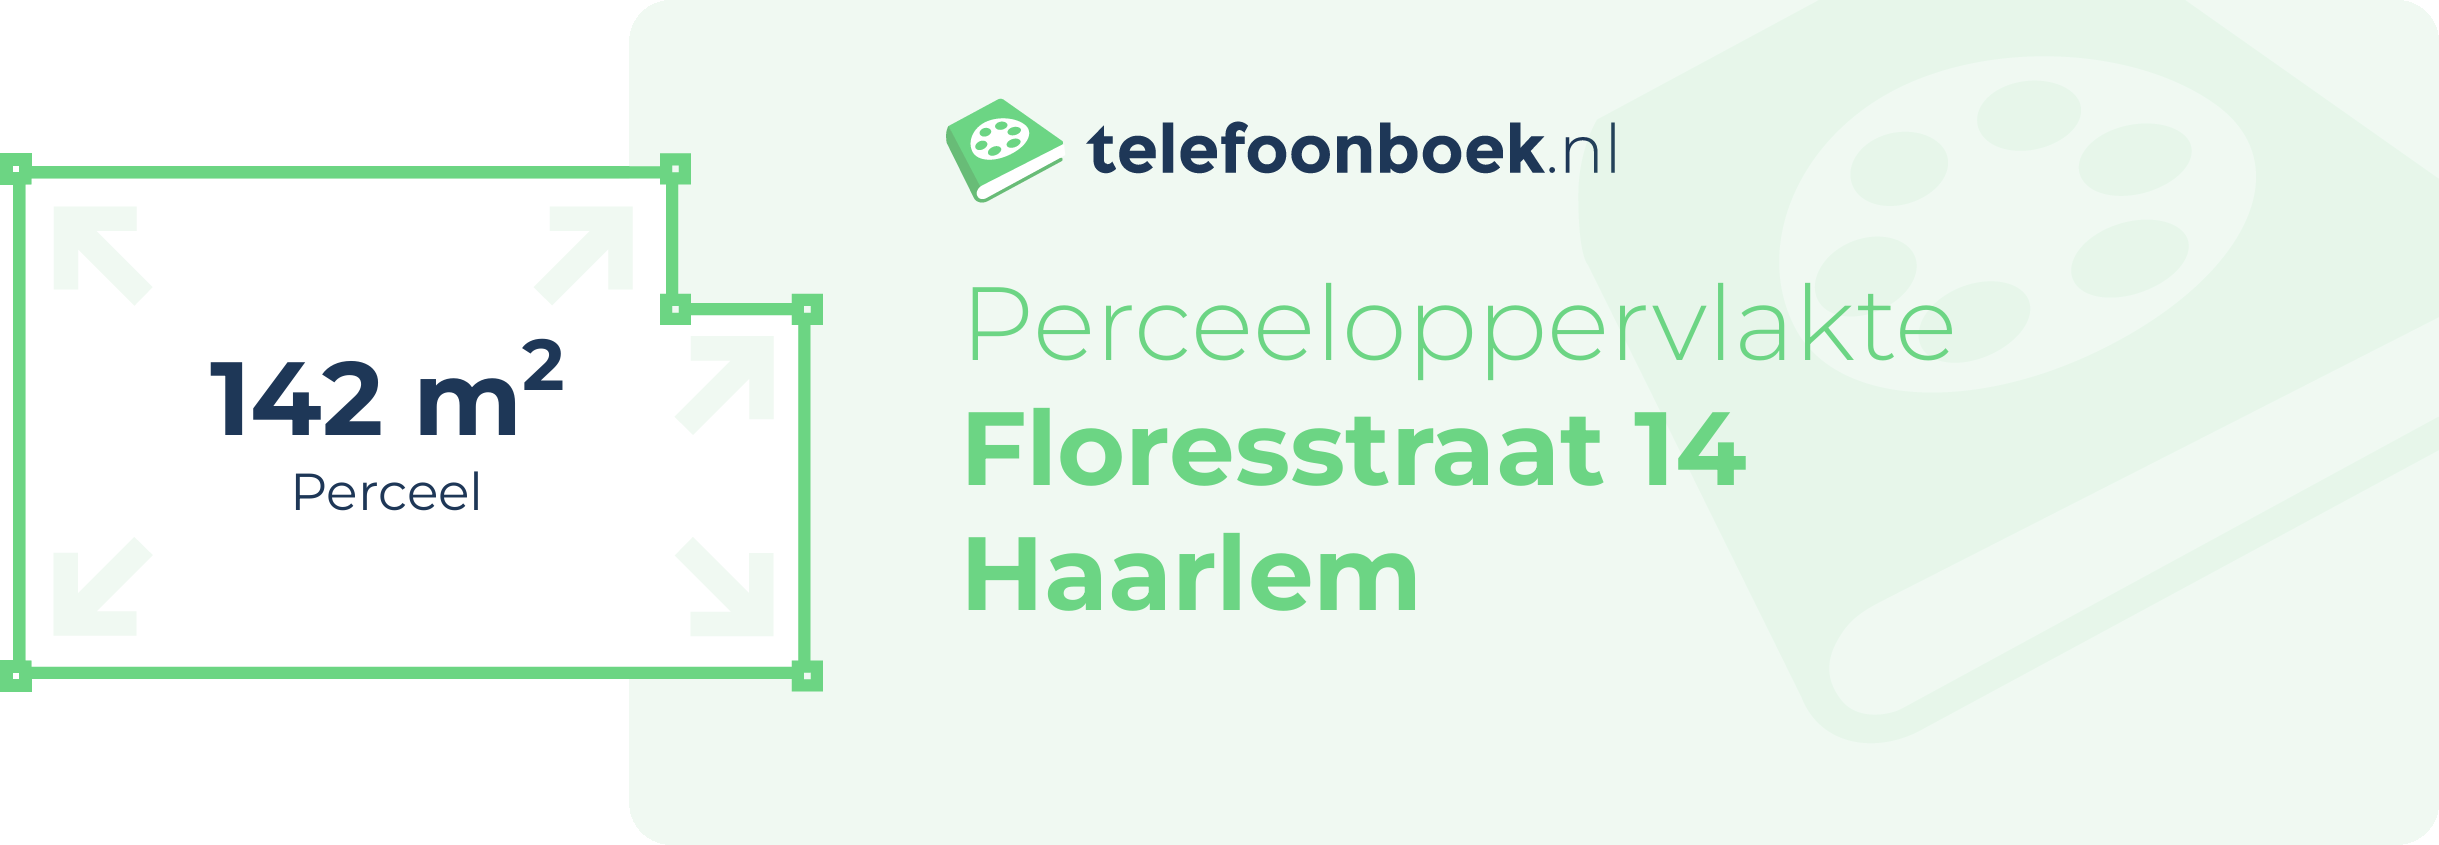 Perceeloppervlakte Floresstraat 14 Haarlem